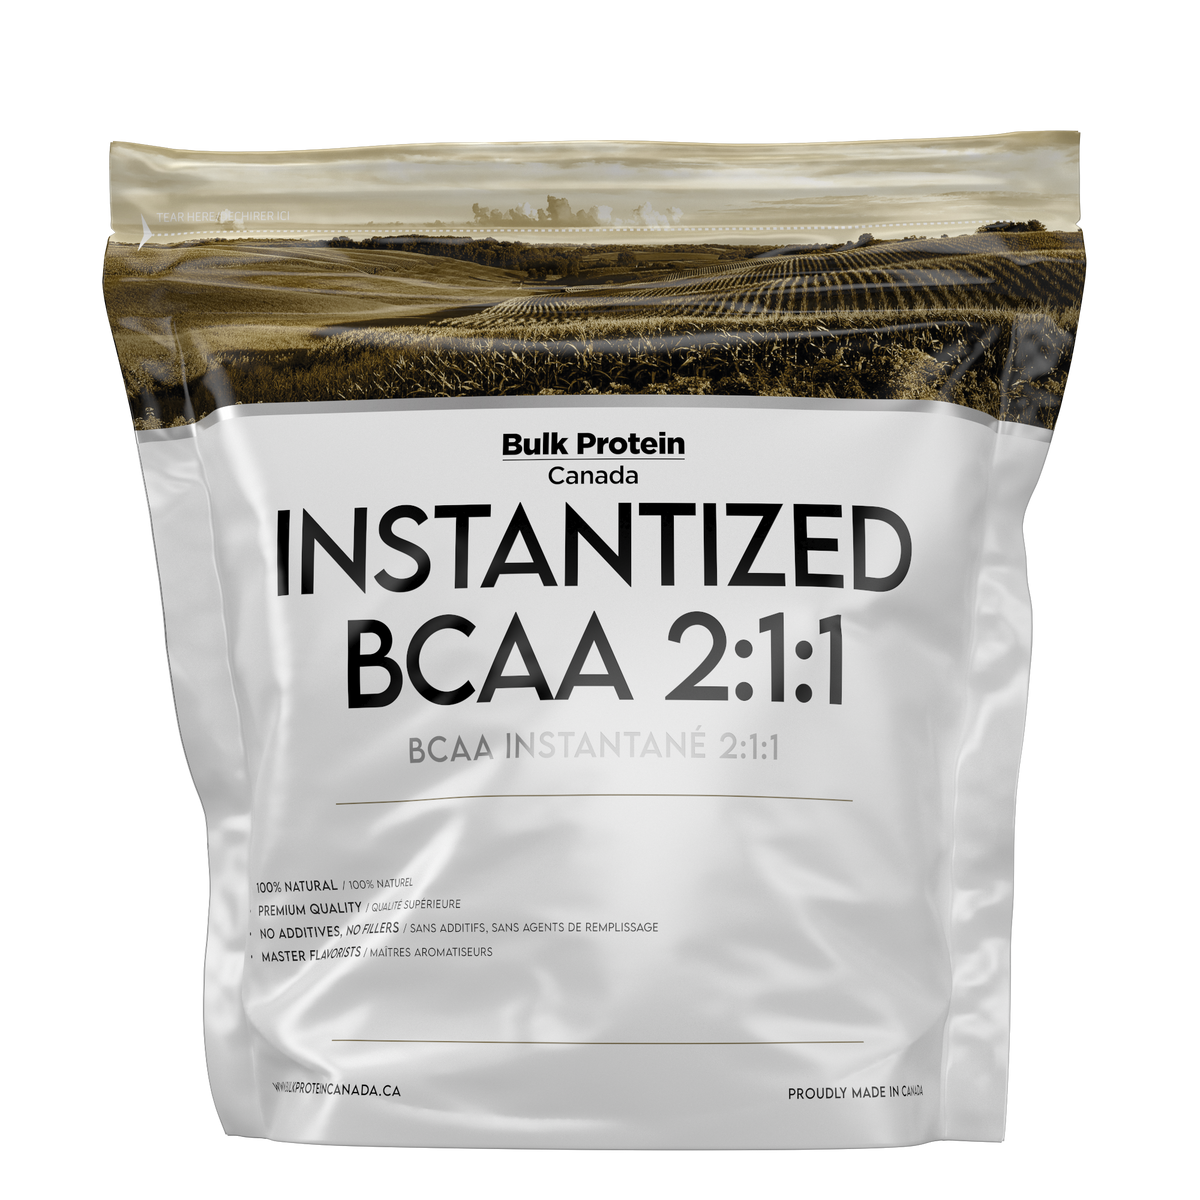 Bulk Protein Canada - BCAA 2:1:1 (Pure Branched-Chain Amino Acids) - 100% Premium Canadian Powder